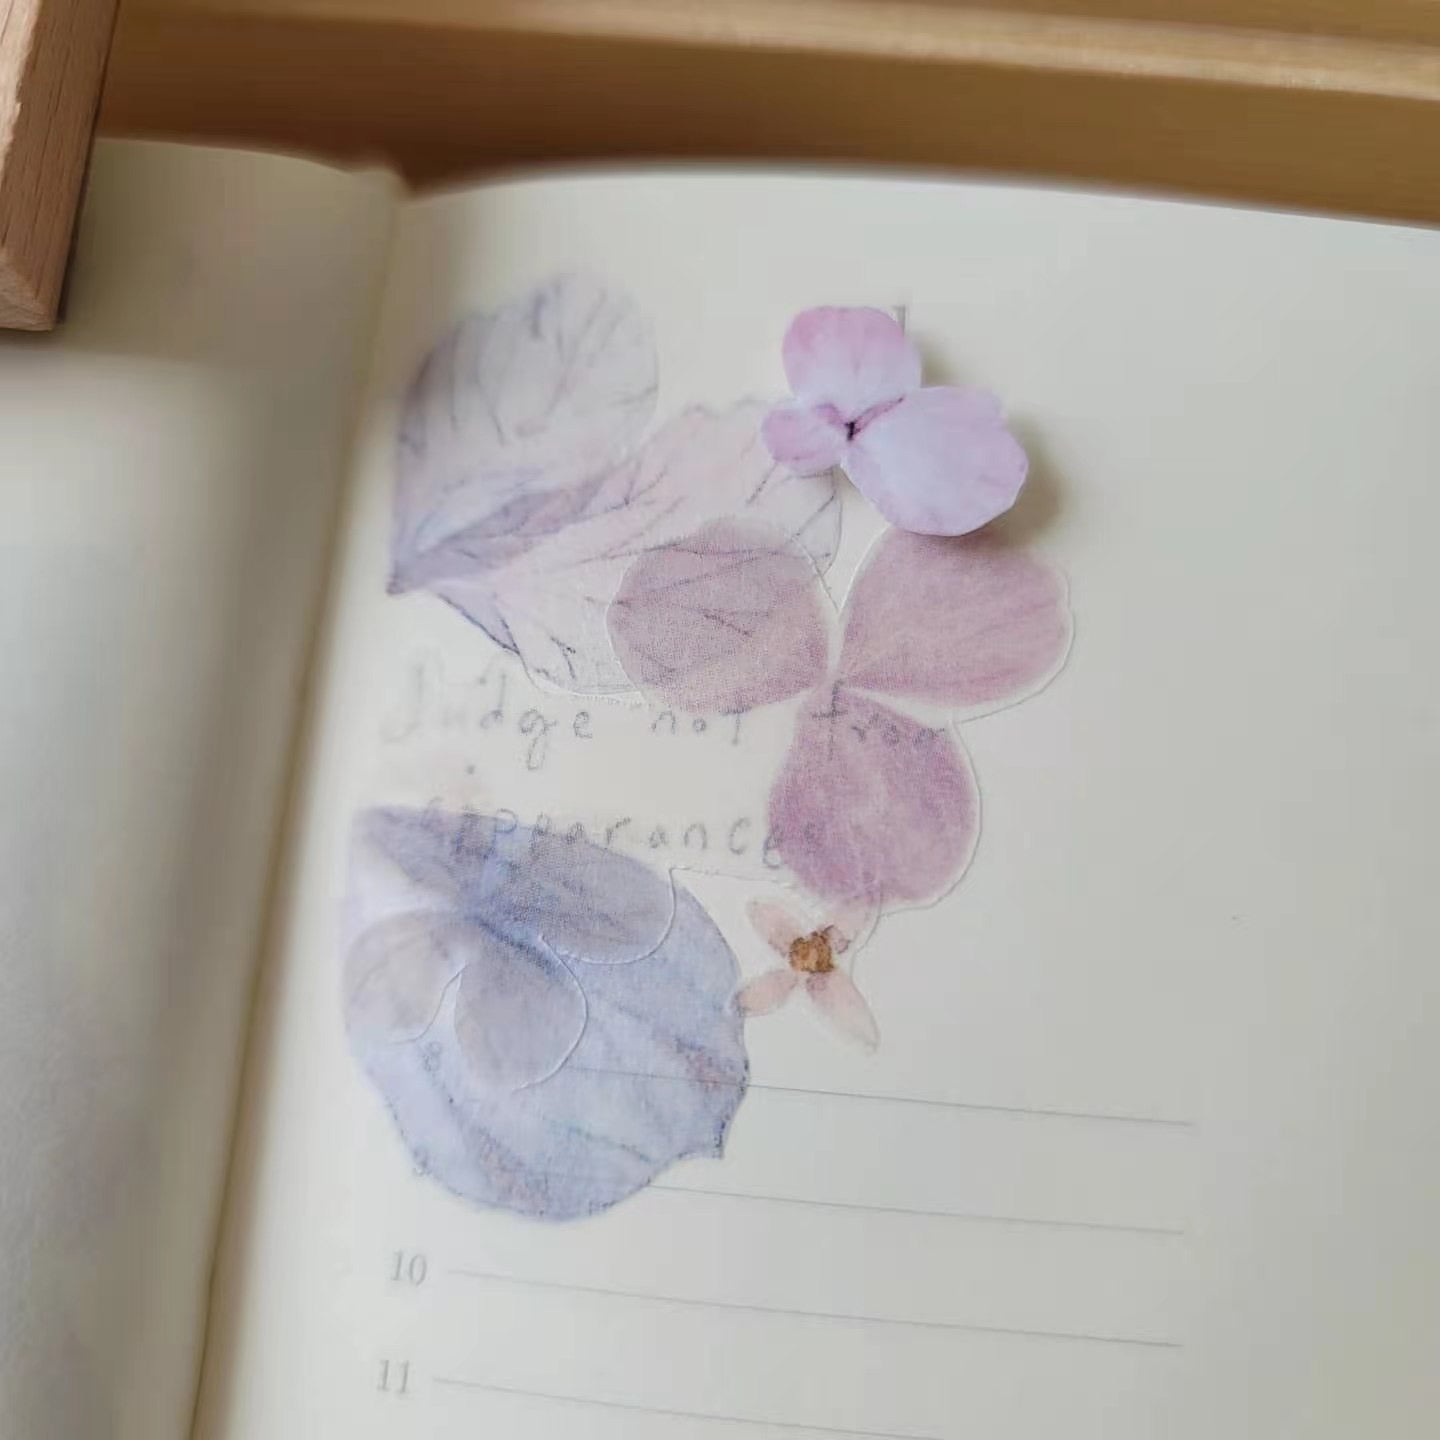 Fairy Ball Washi Tape: Flower Petals